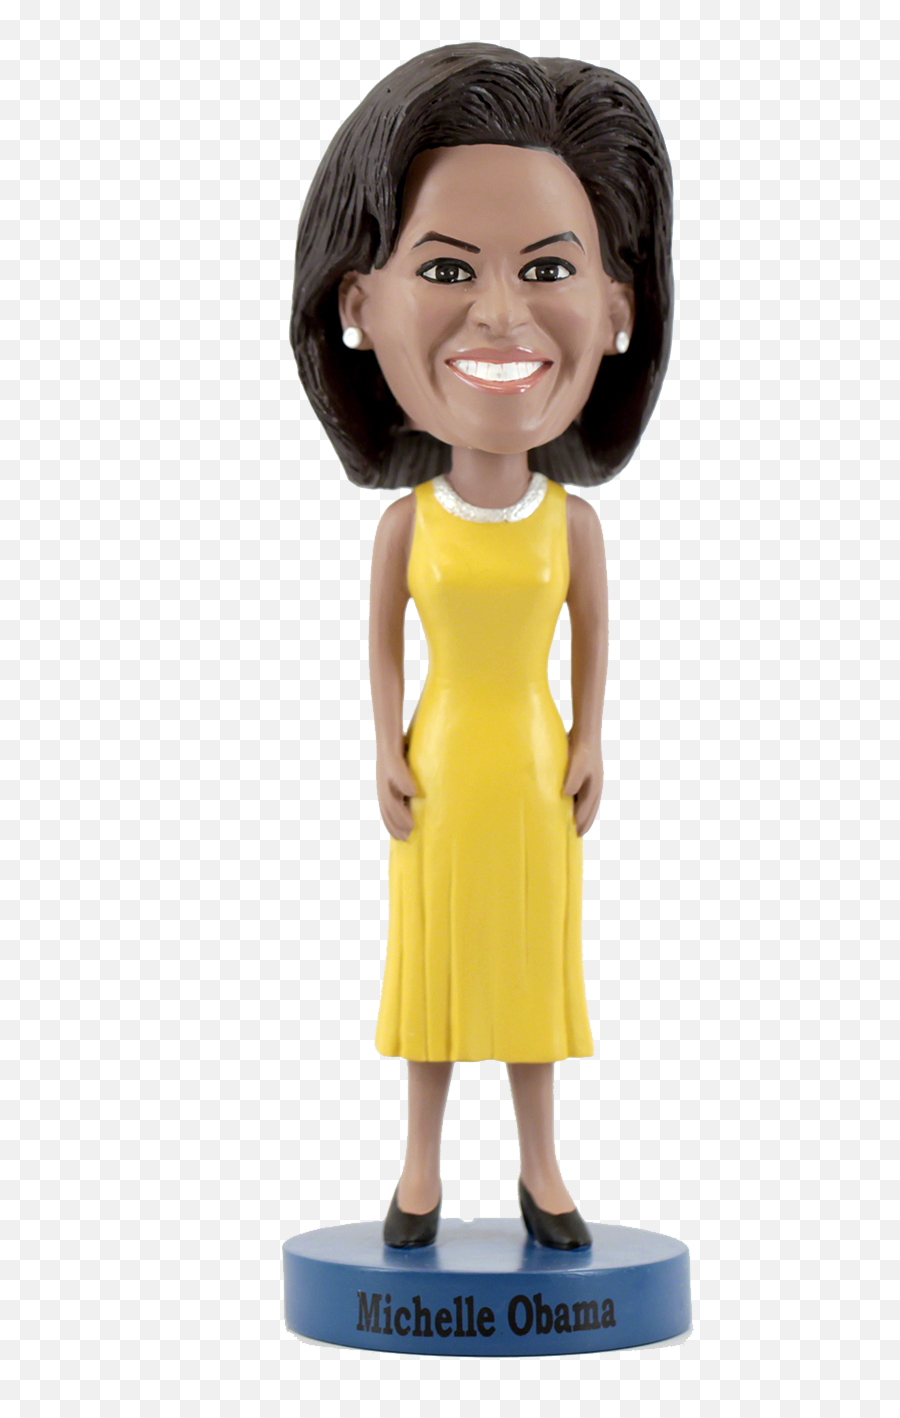 Michelle Obama Bobblehead Limited - Barack Obama And Michelle Obama Bobbleheads Emoji,Obama Png